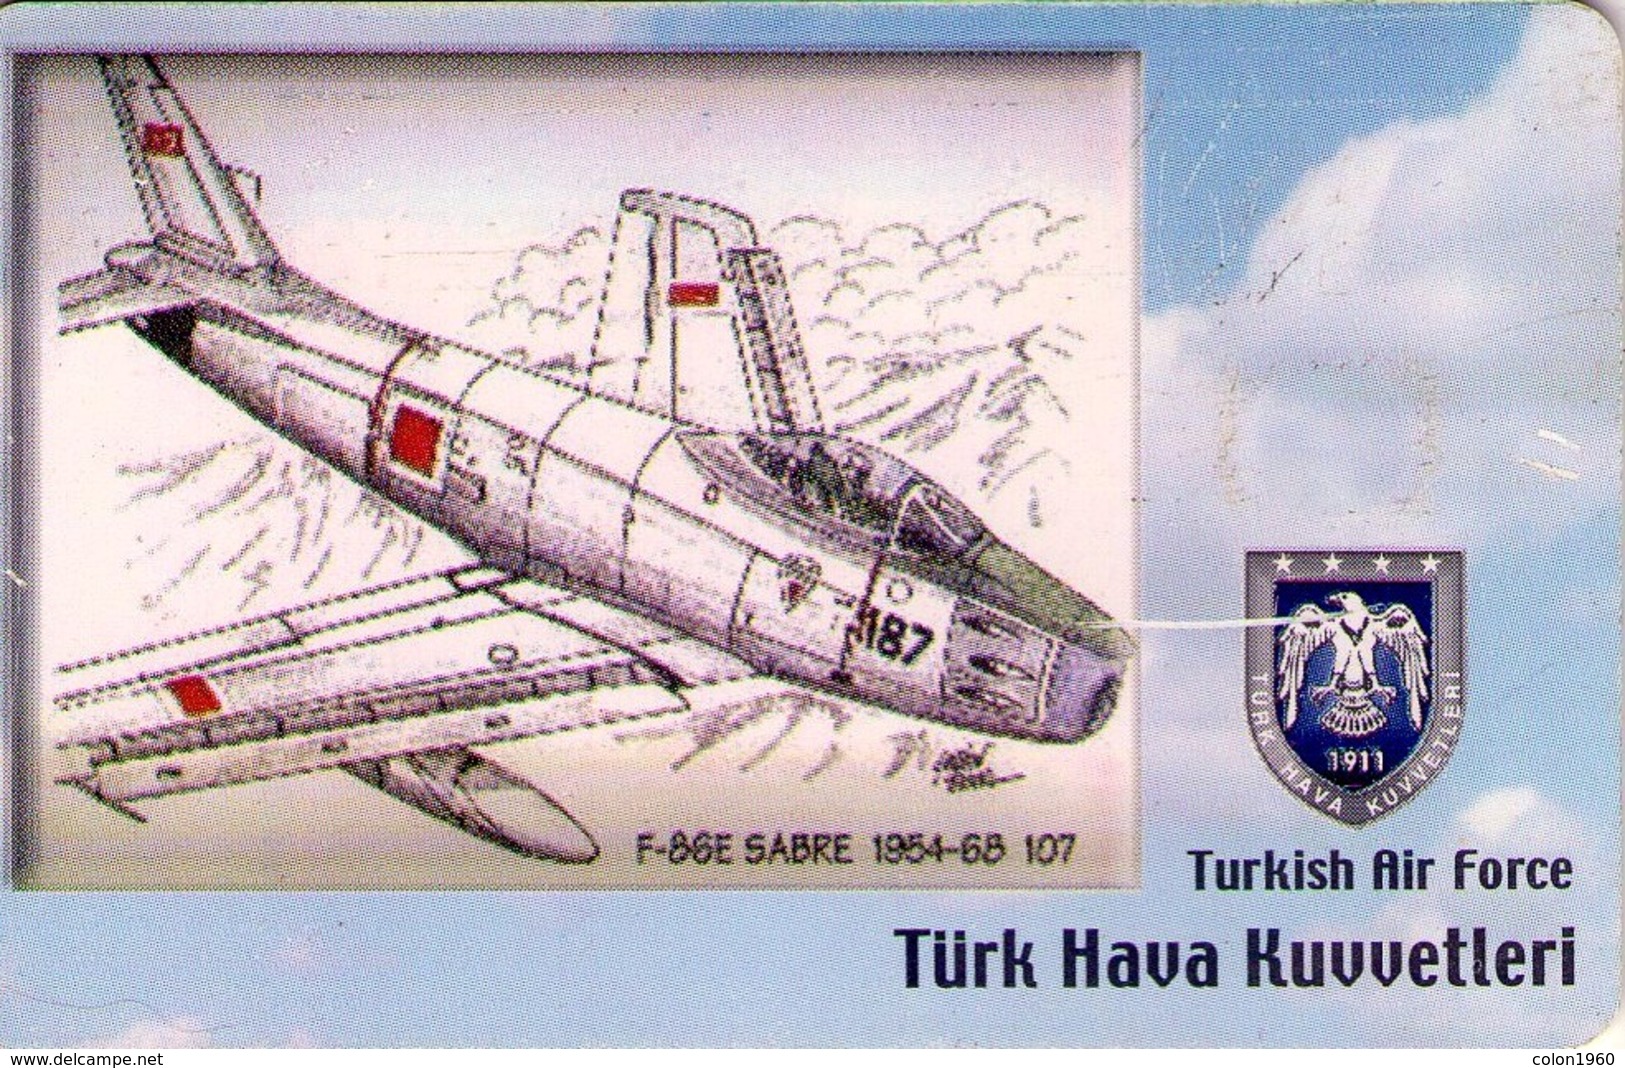 TURQUIA, AVION. (CHIP) TURKISH AIR FORCE, F-86E SABRE 1952-66. TR-TT-C-0162. (128) - Avions